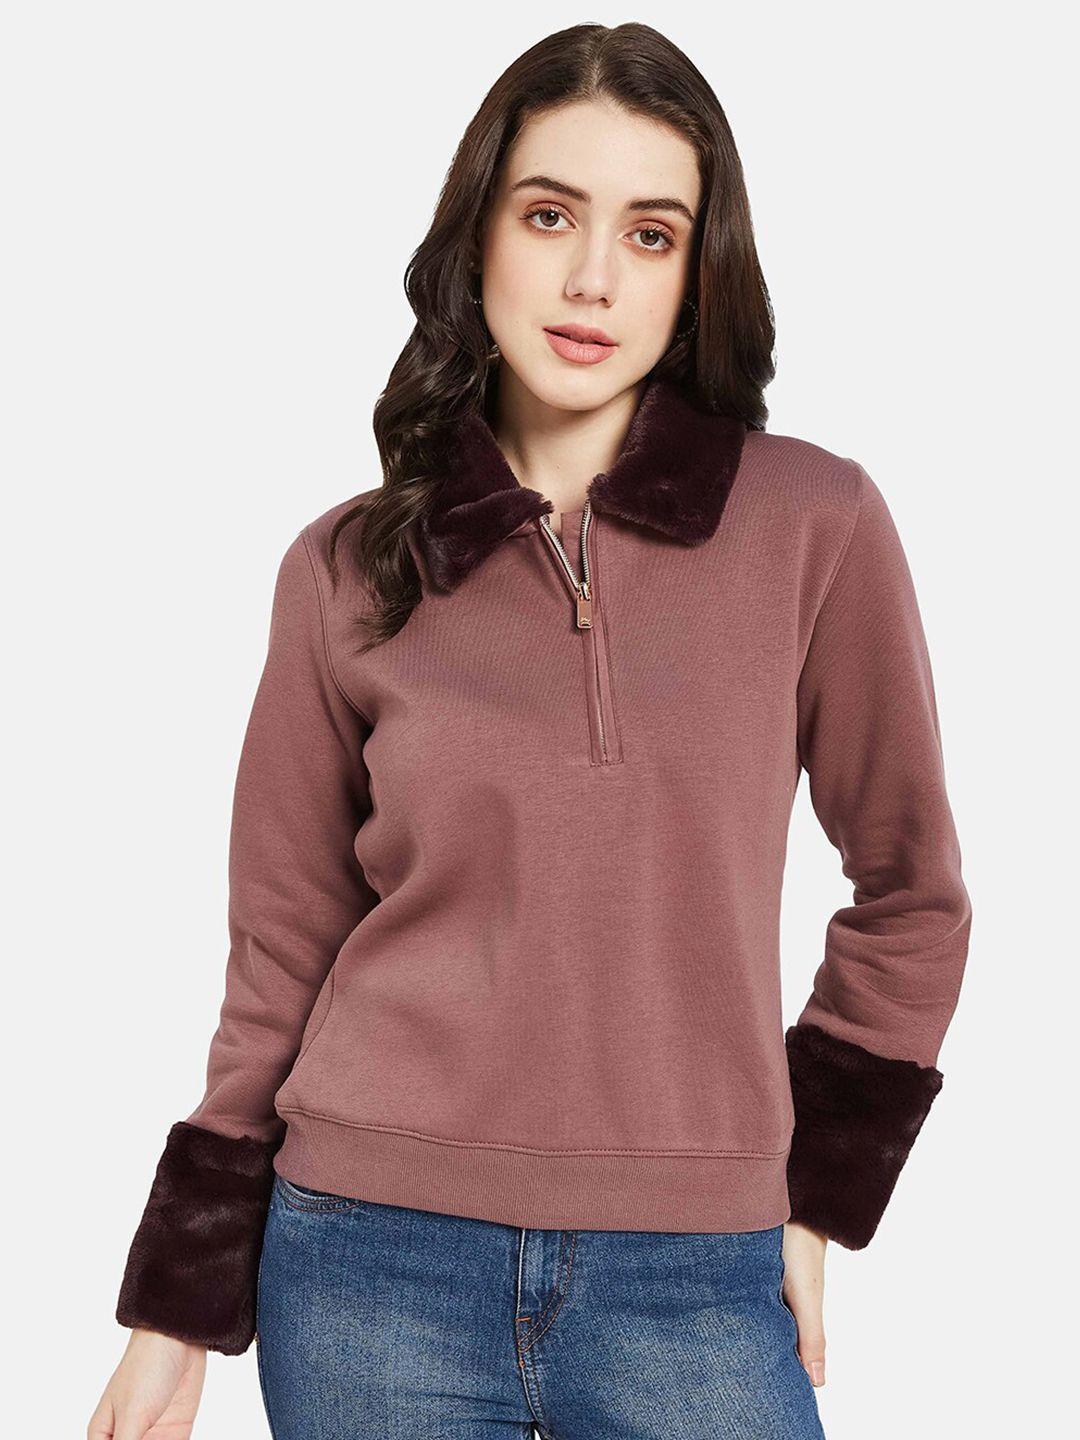 mettle shirt collar long sleeves fleece fur pullover sweatshirt